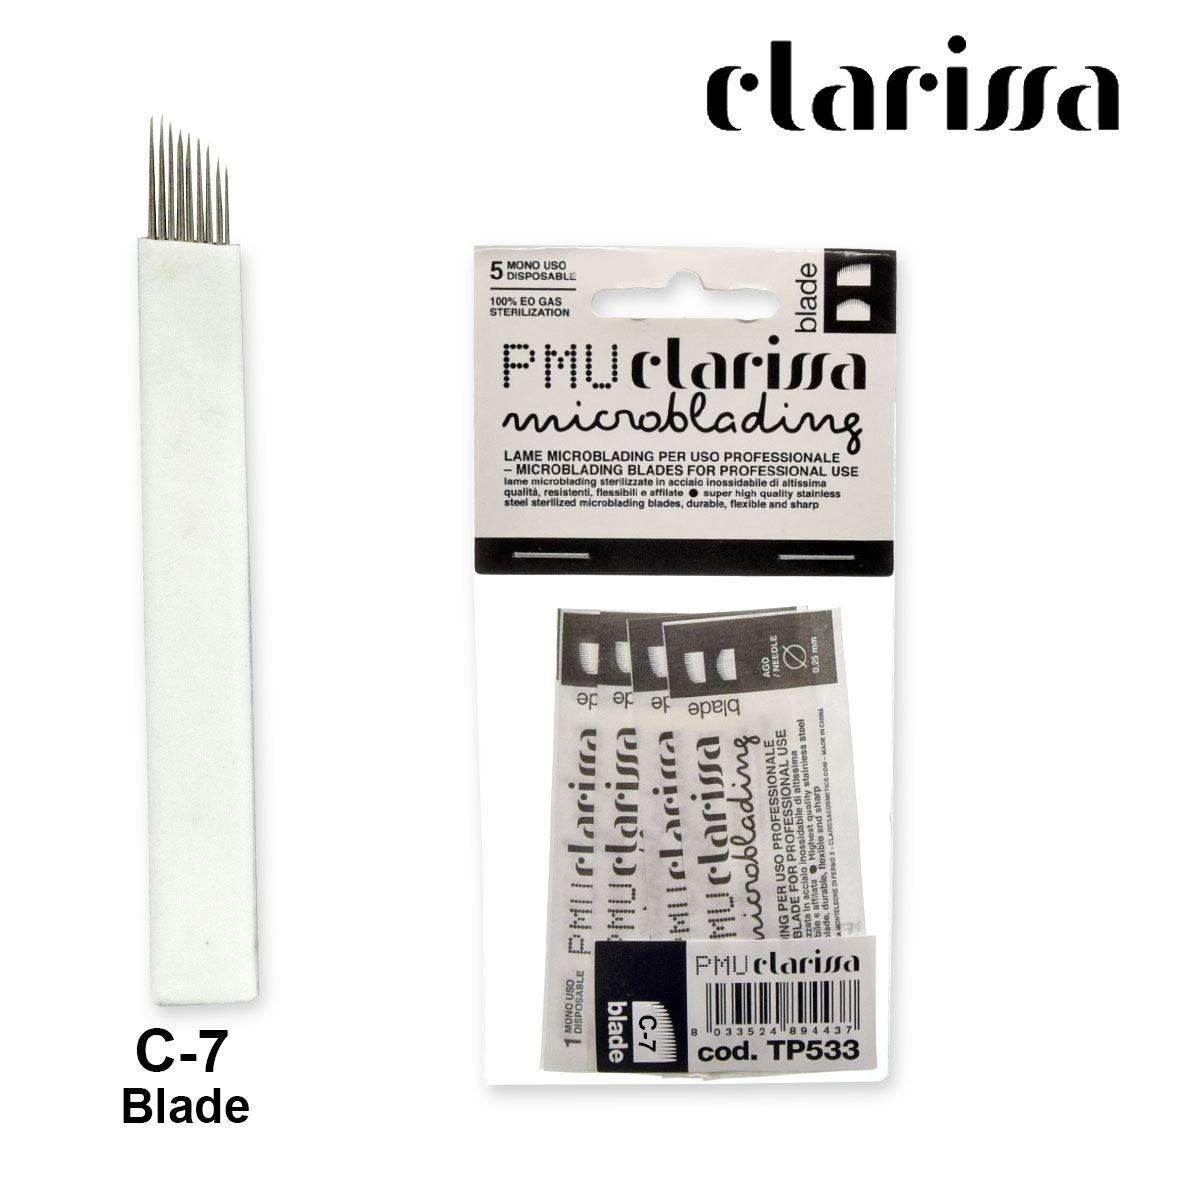 Clarissa pmu c-7 curve blade confezione da 5 pezzi